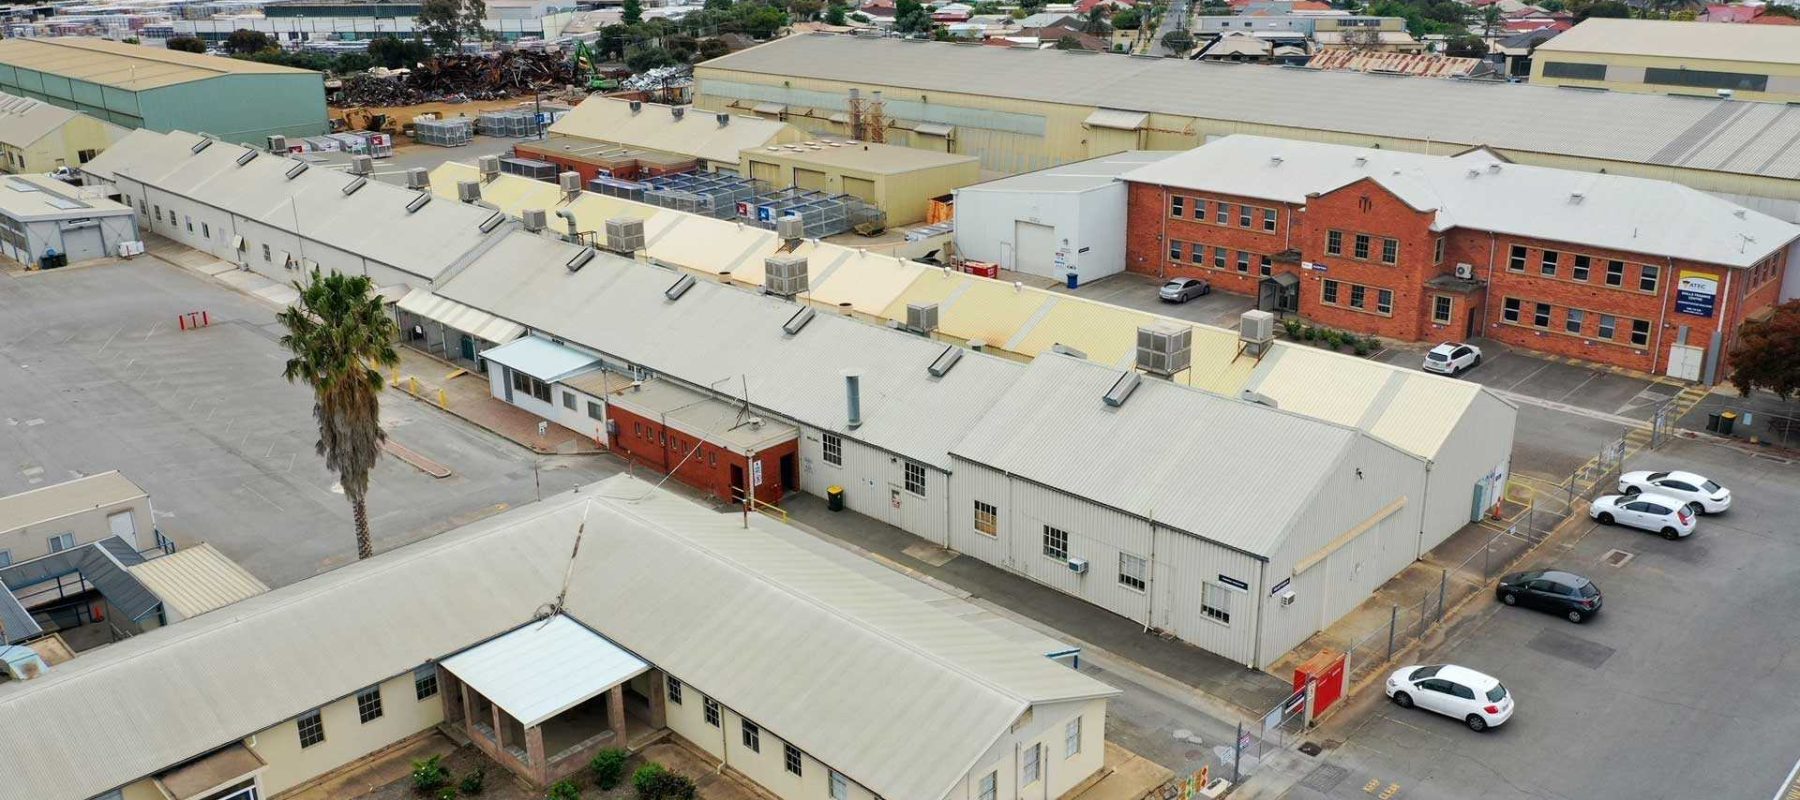 Aerial view of ATEC training facility, Ottoway South Australia.